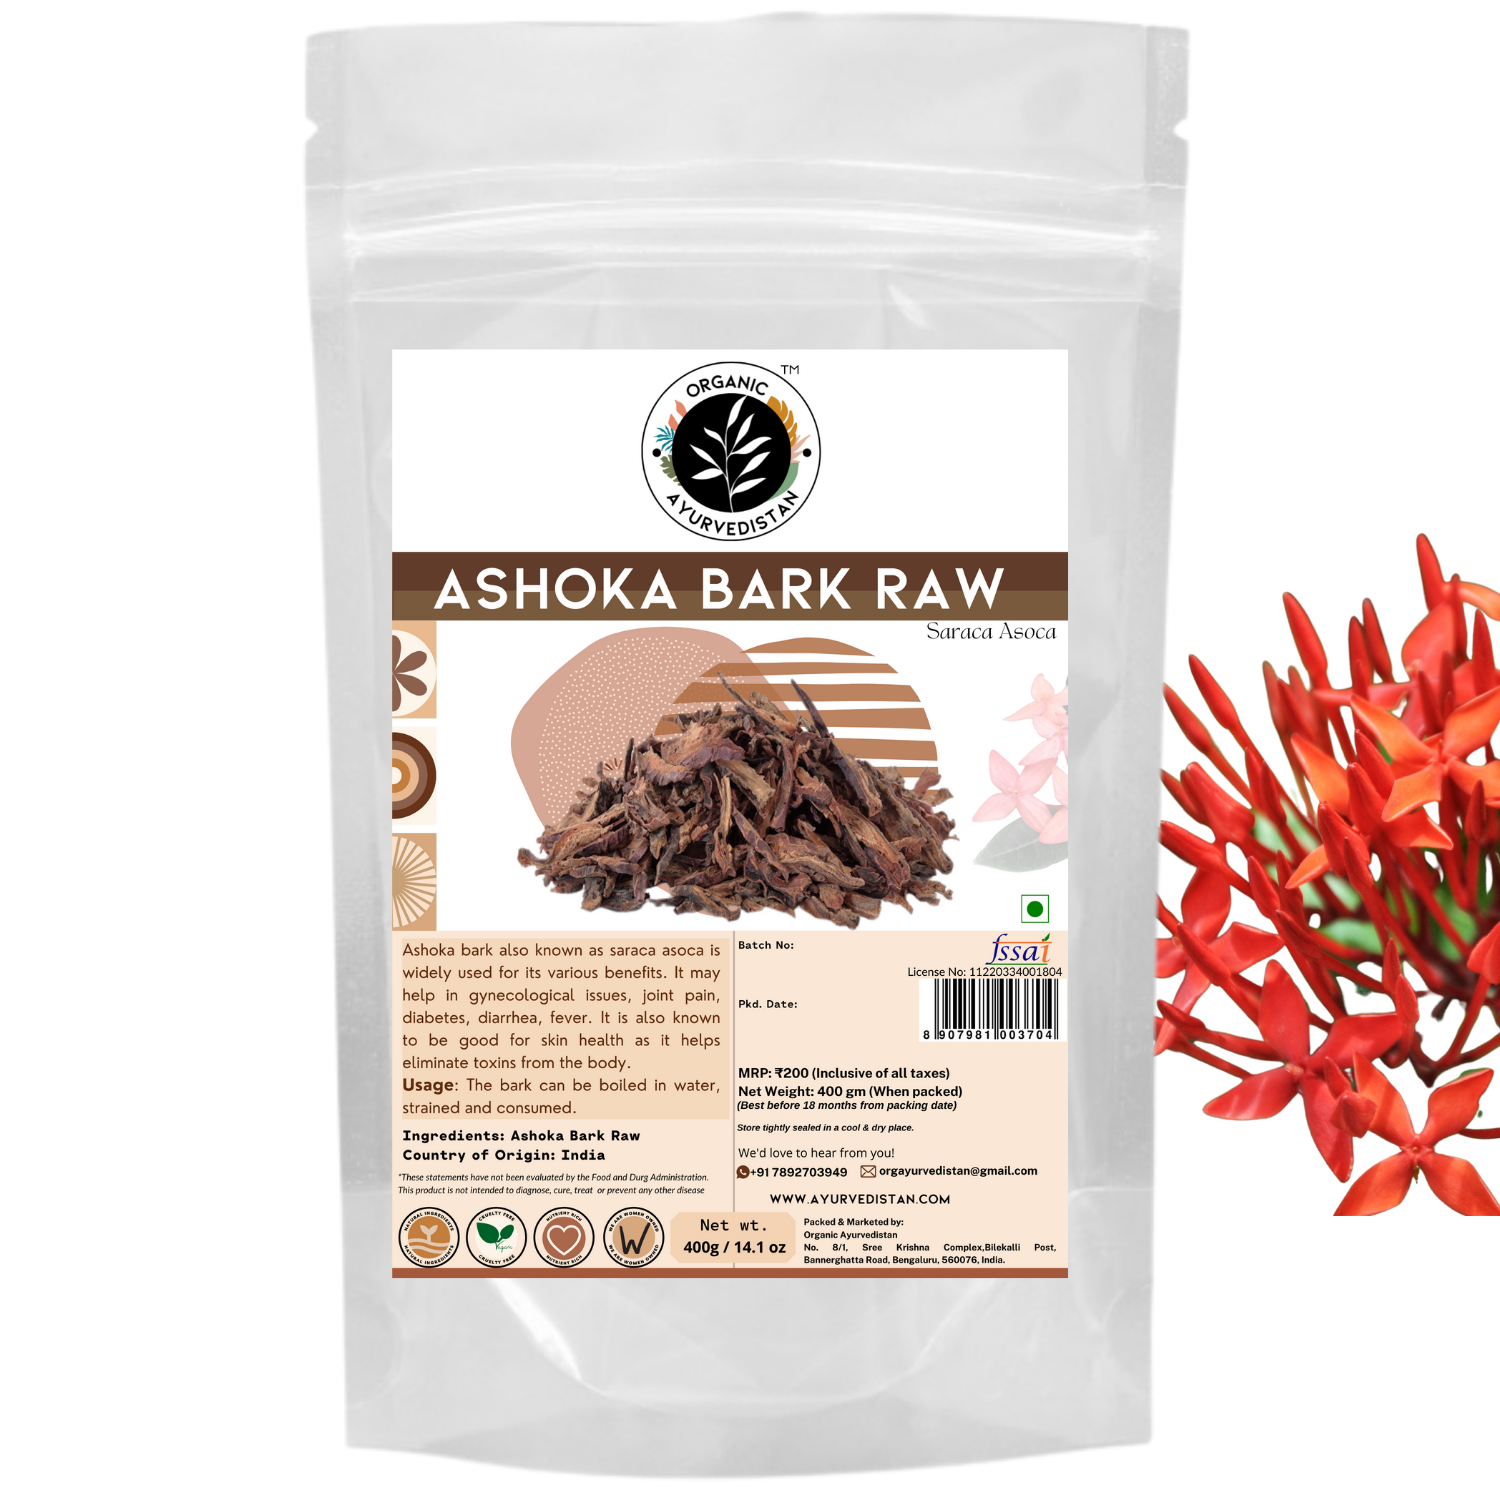 Ashoka bark raw